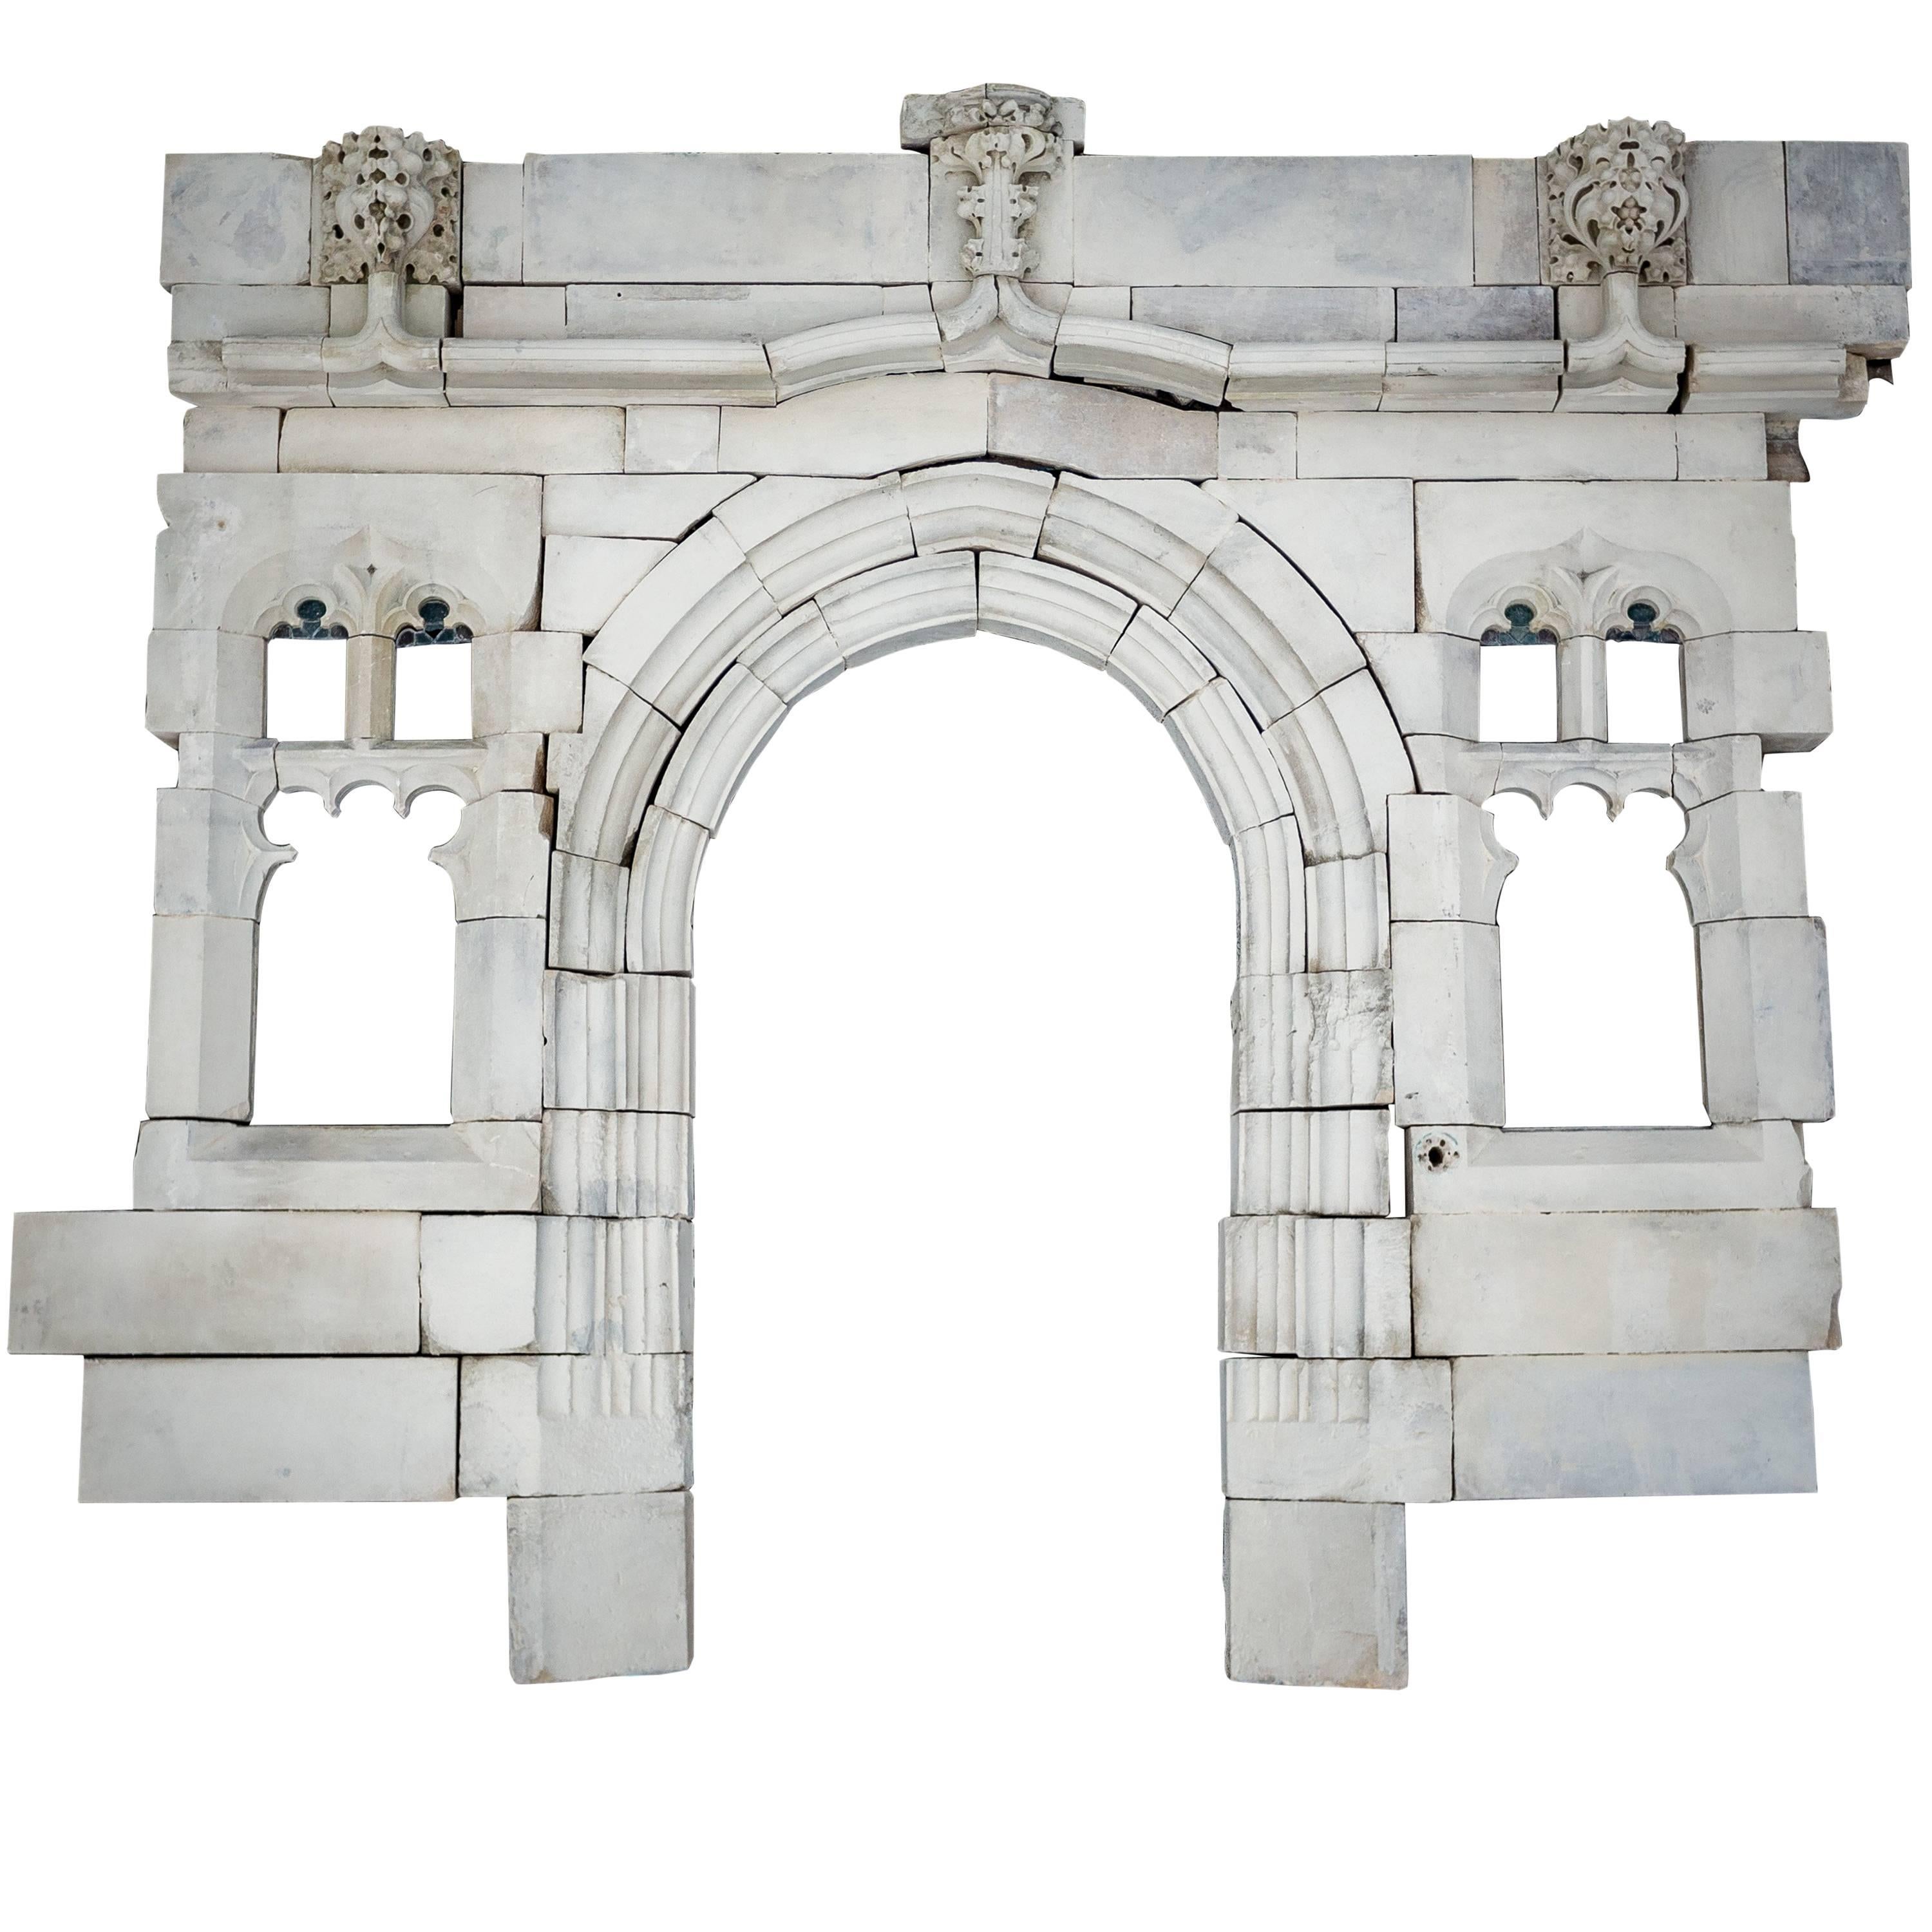 19th Century Gothic Arched Bath Stone Doorway Entranceway with Mullion Windows  For Sale